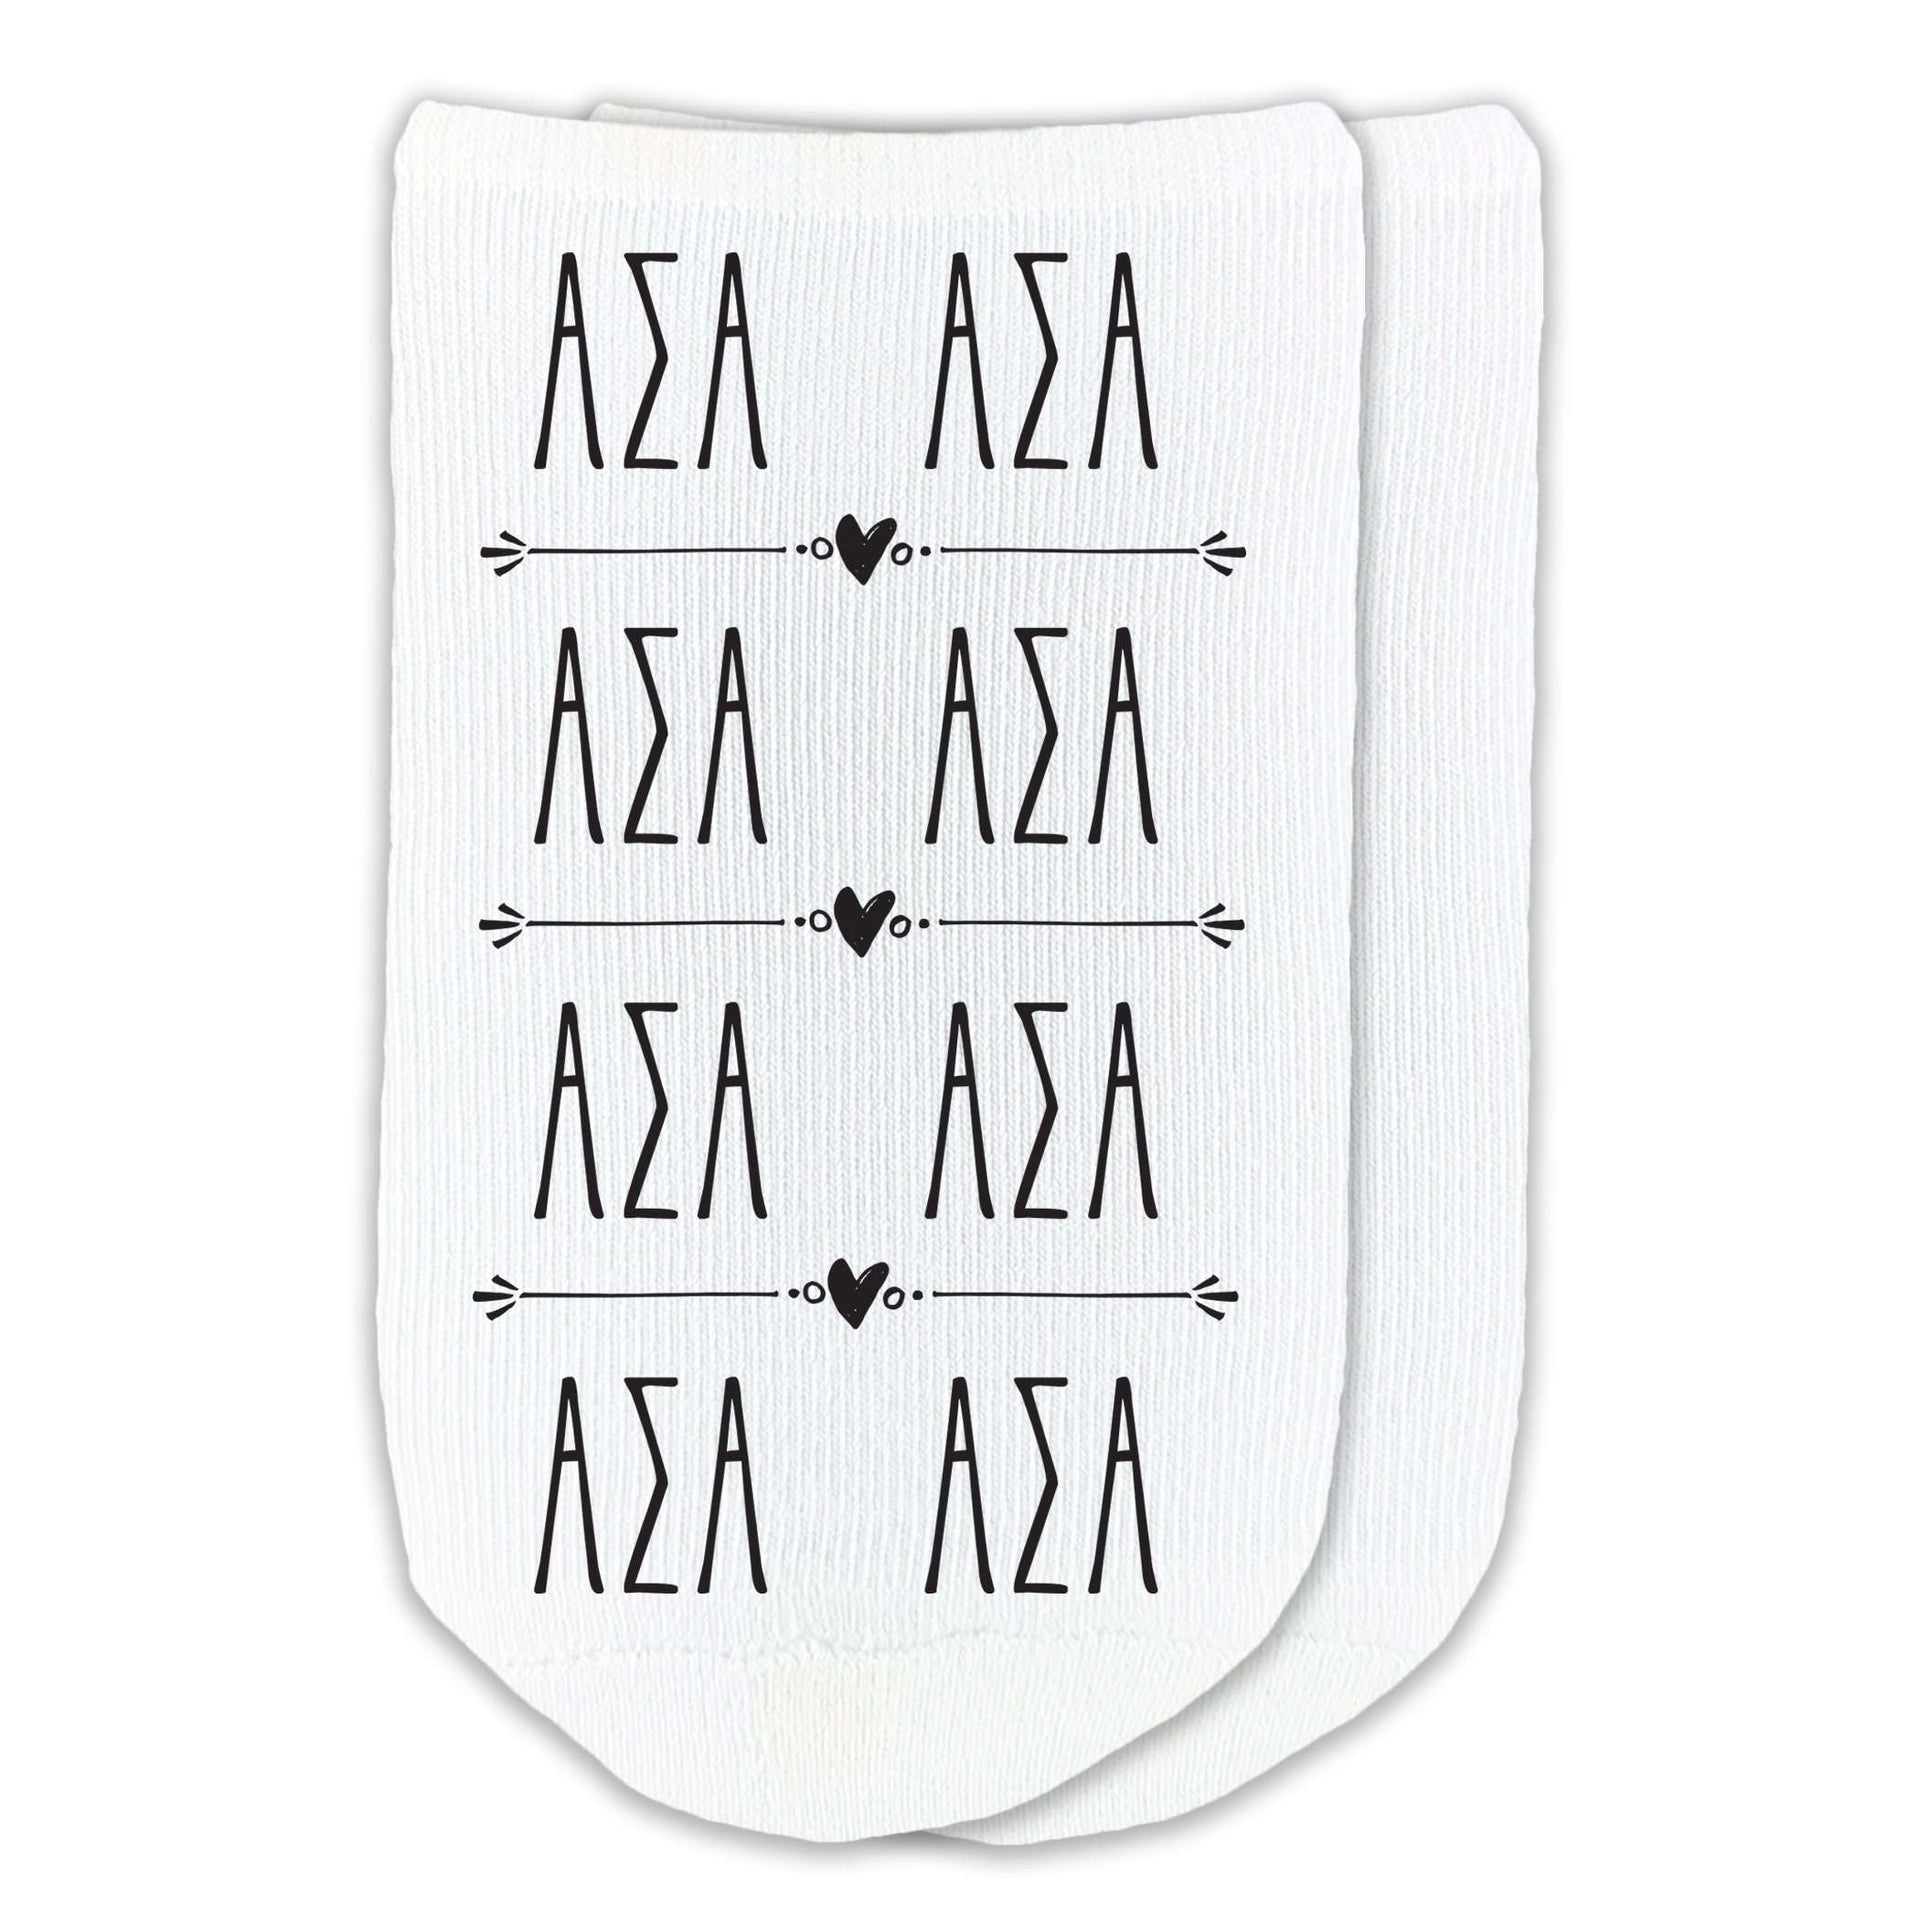 Alpha Sigma Alpha sorority letters boho style printed on no show socks.